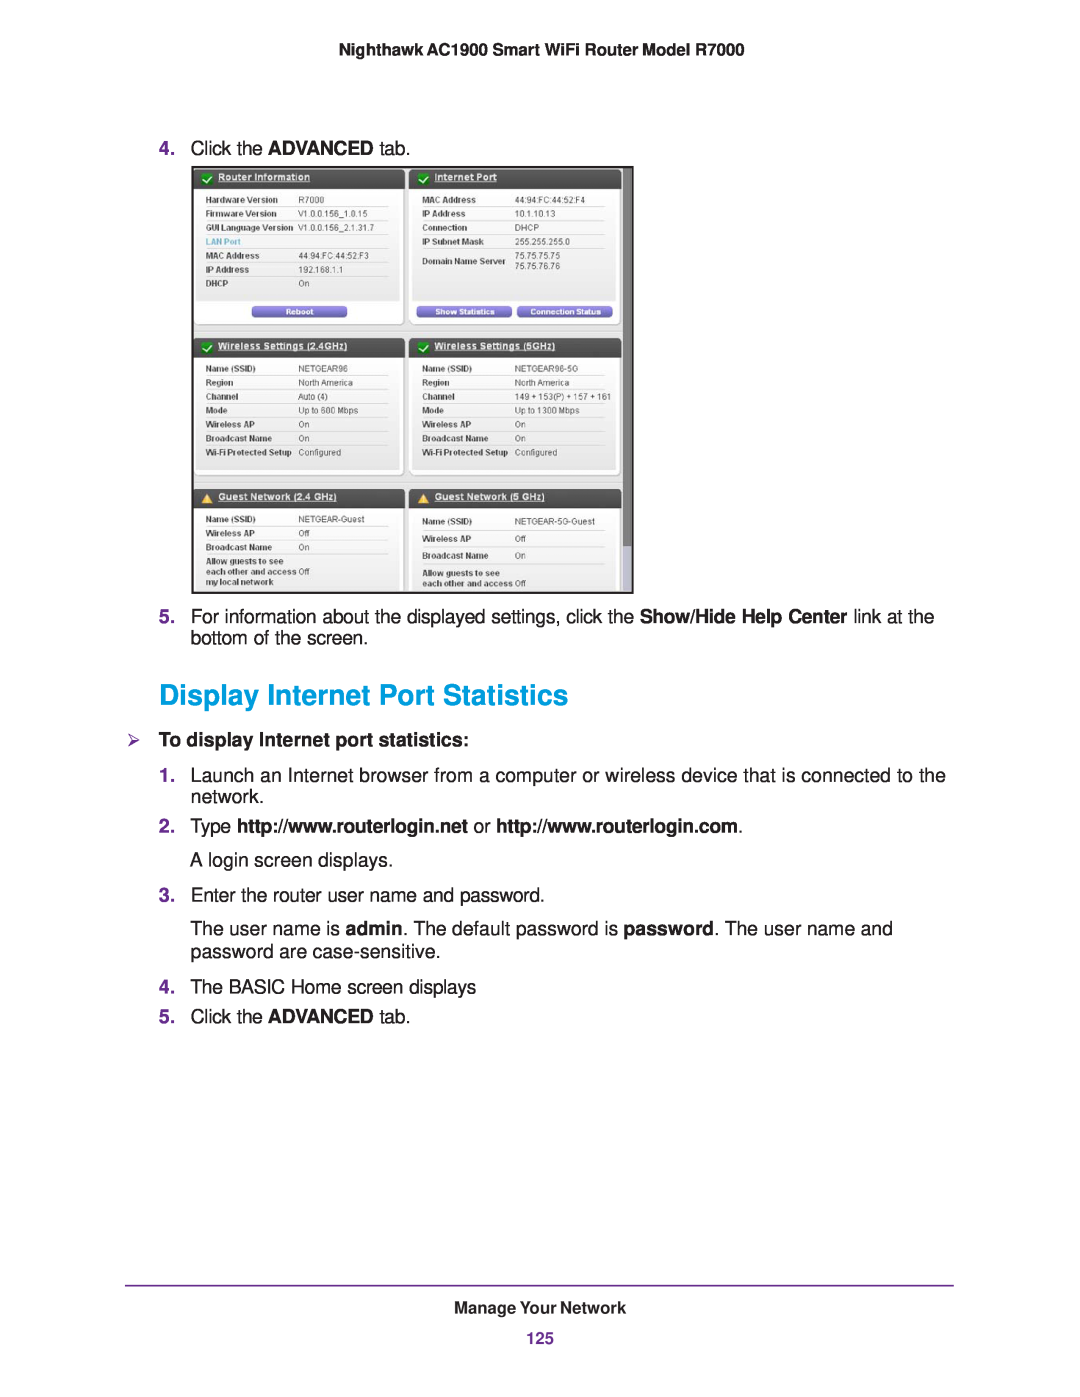 NETGEAR R7000 user manual Display Internet Port Statistics,  To display Internet port statistics 